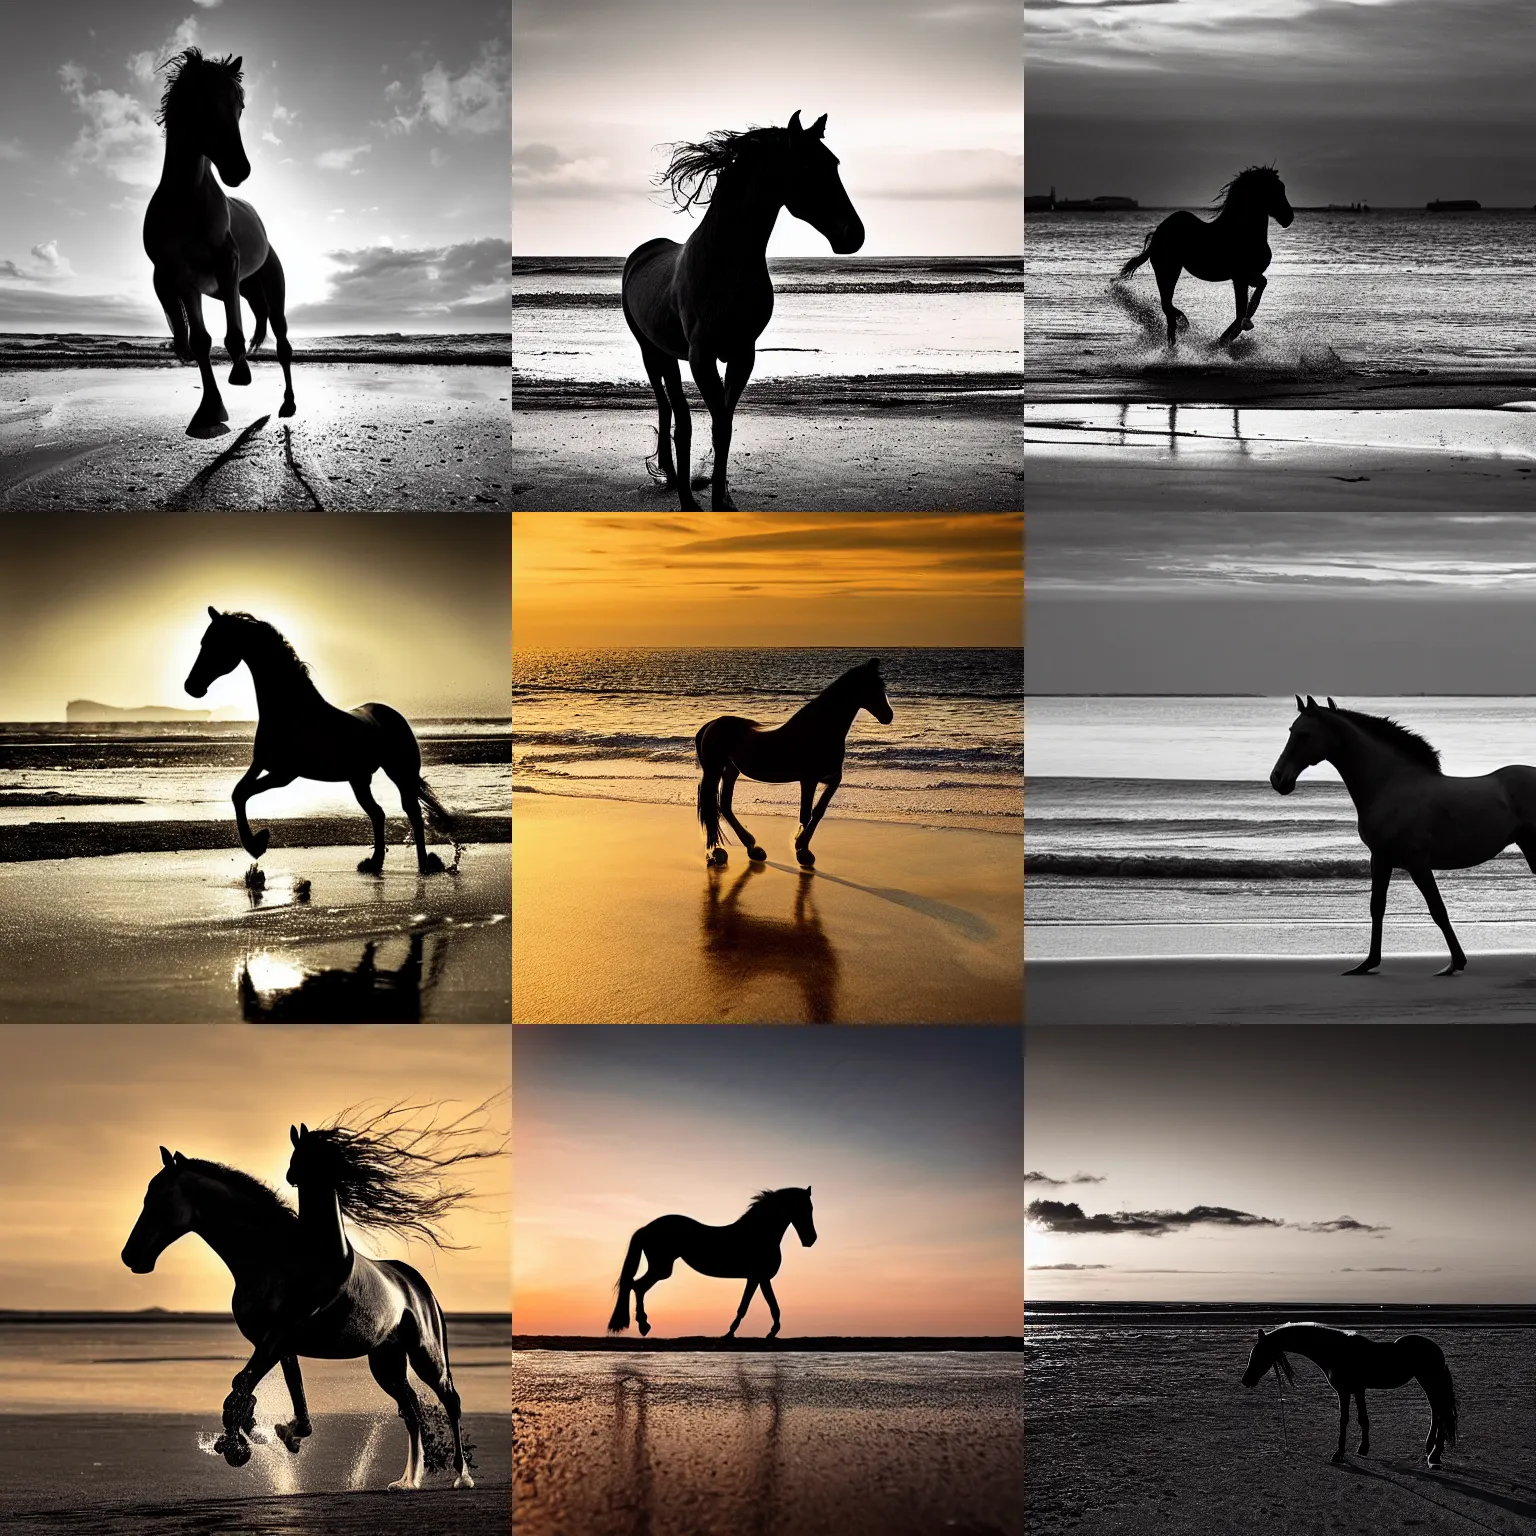 Prompt: Horse on beach sunset David Yarrow